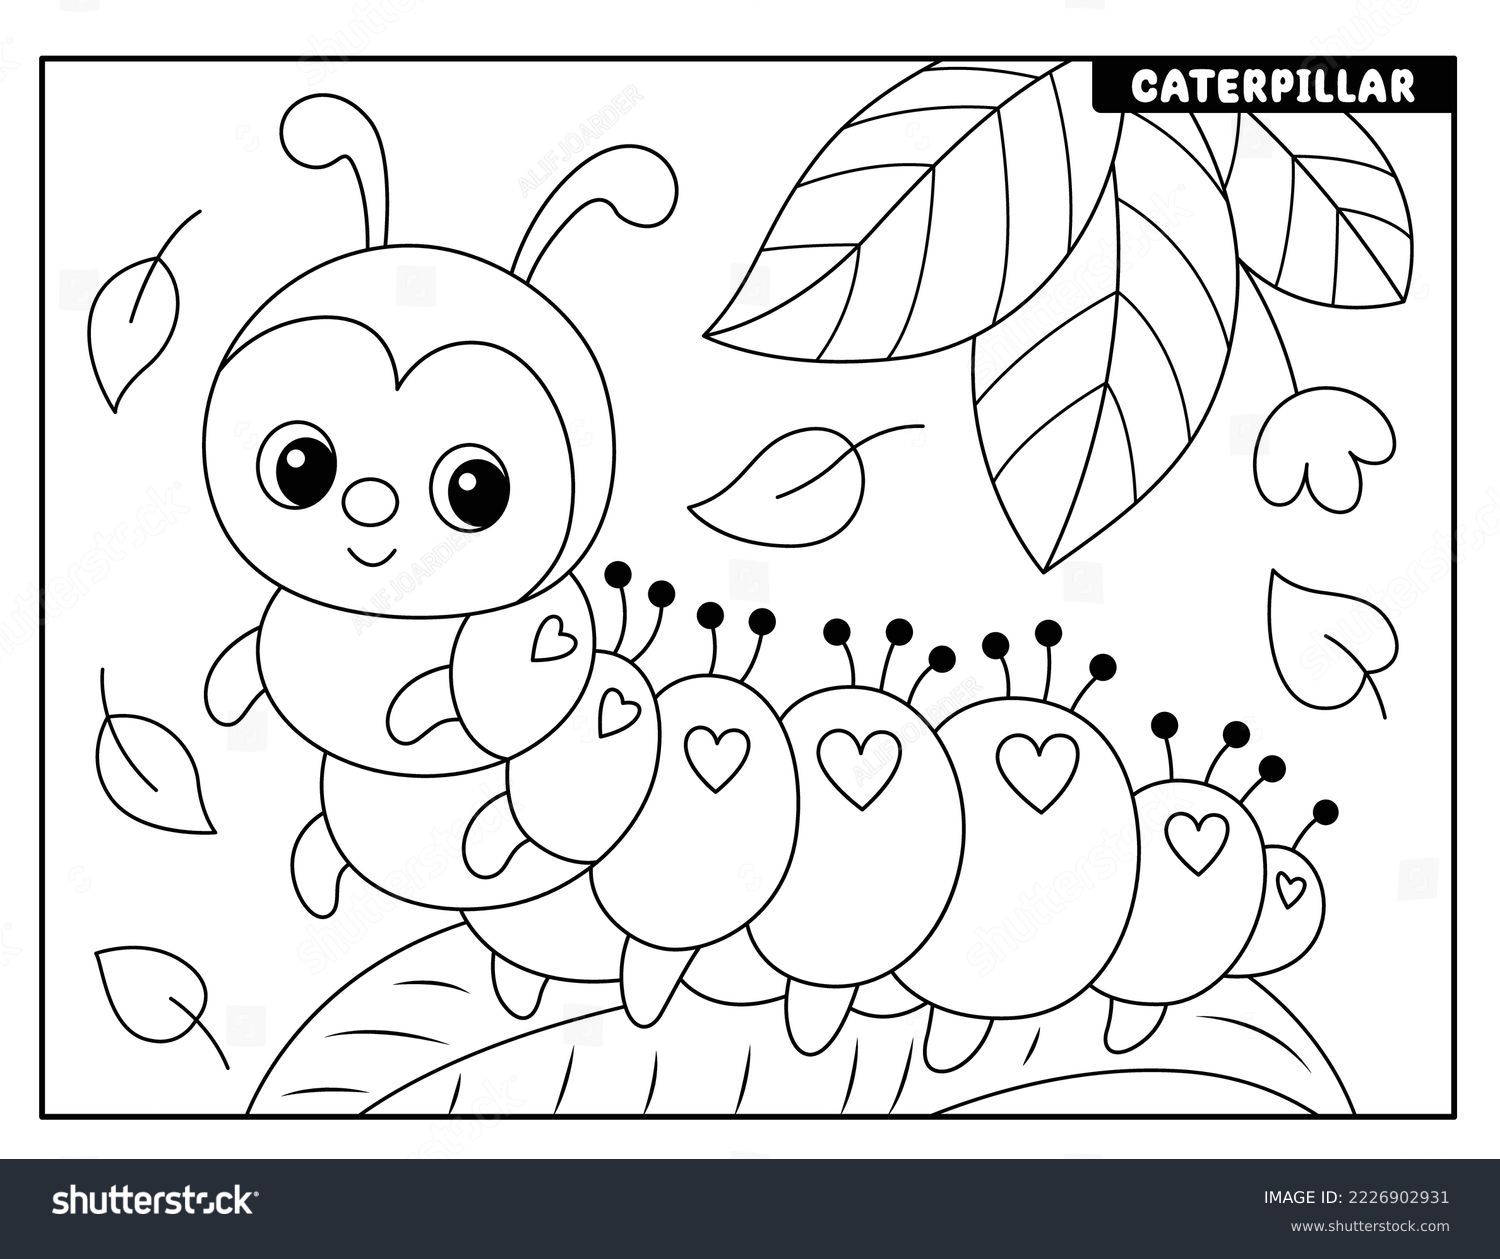 Thousand caterpillar outline royalty